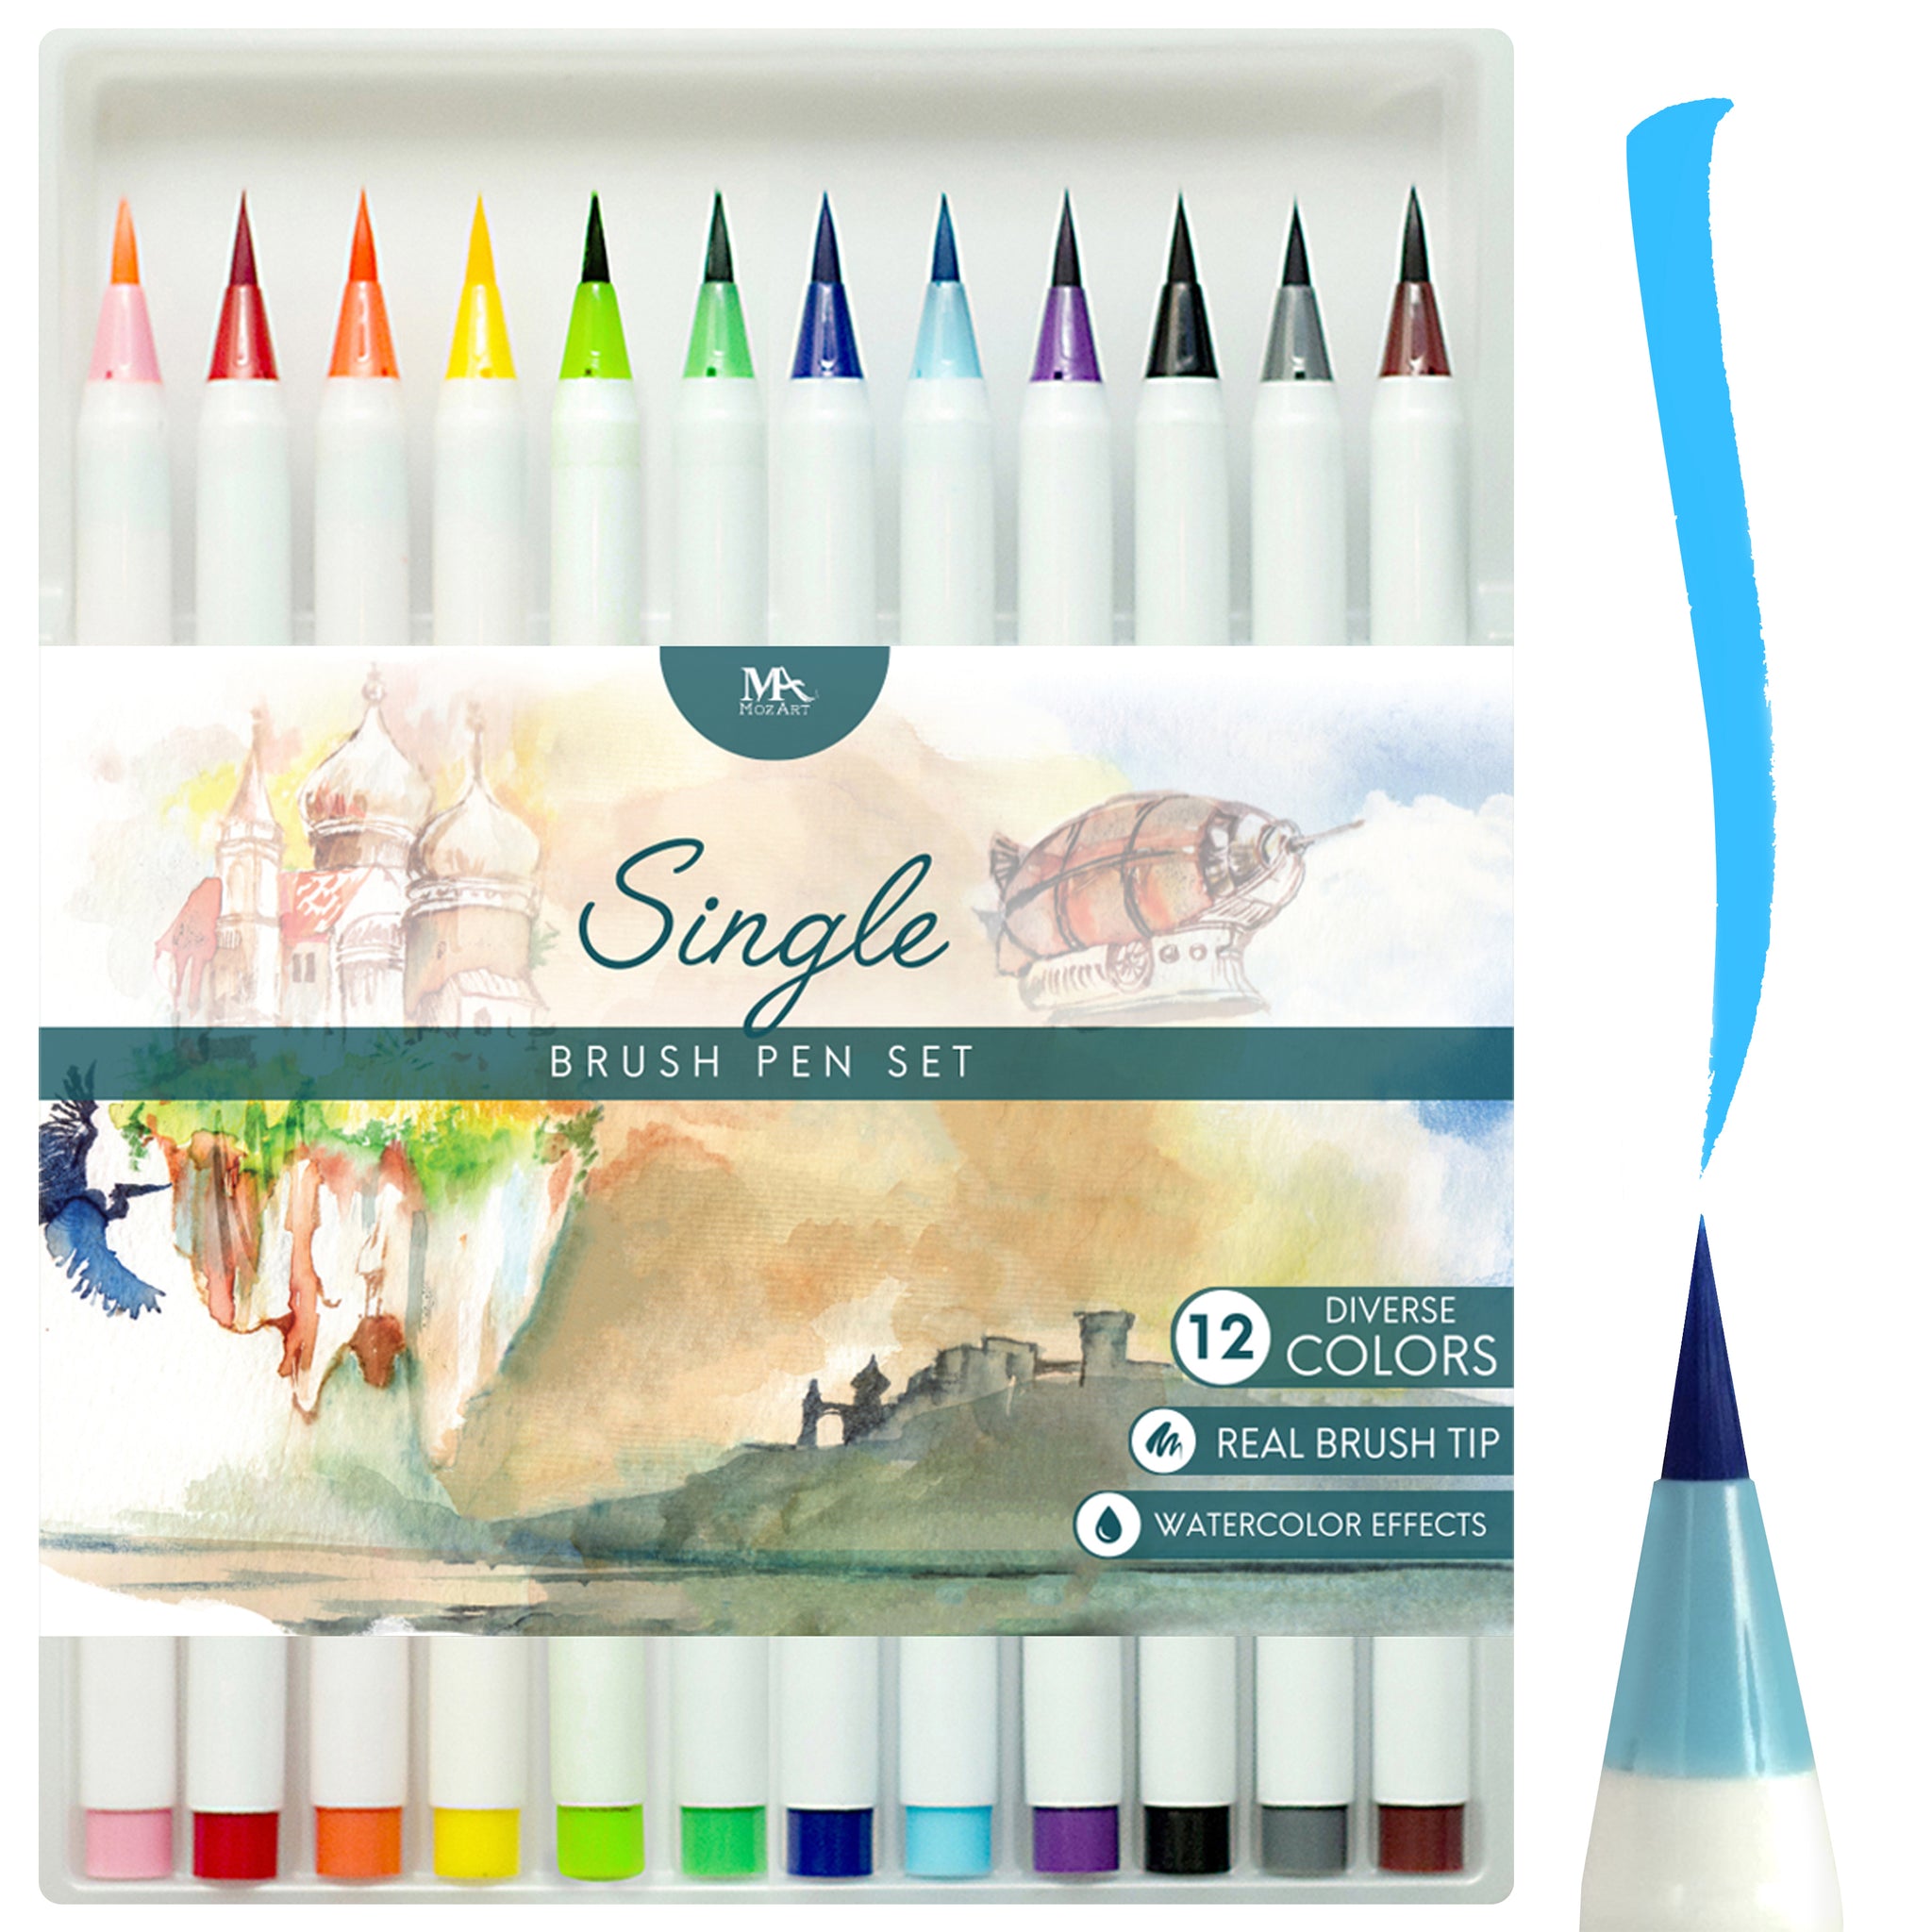 Watercolor Brush Pen Comparison 